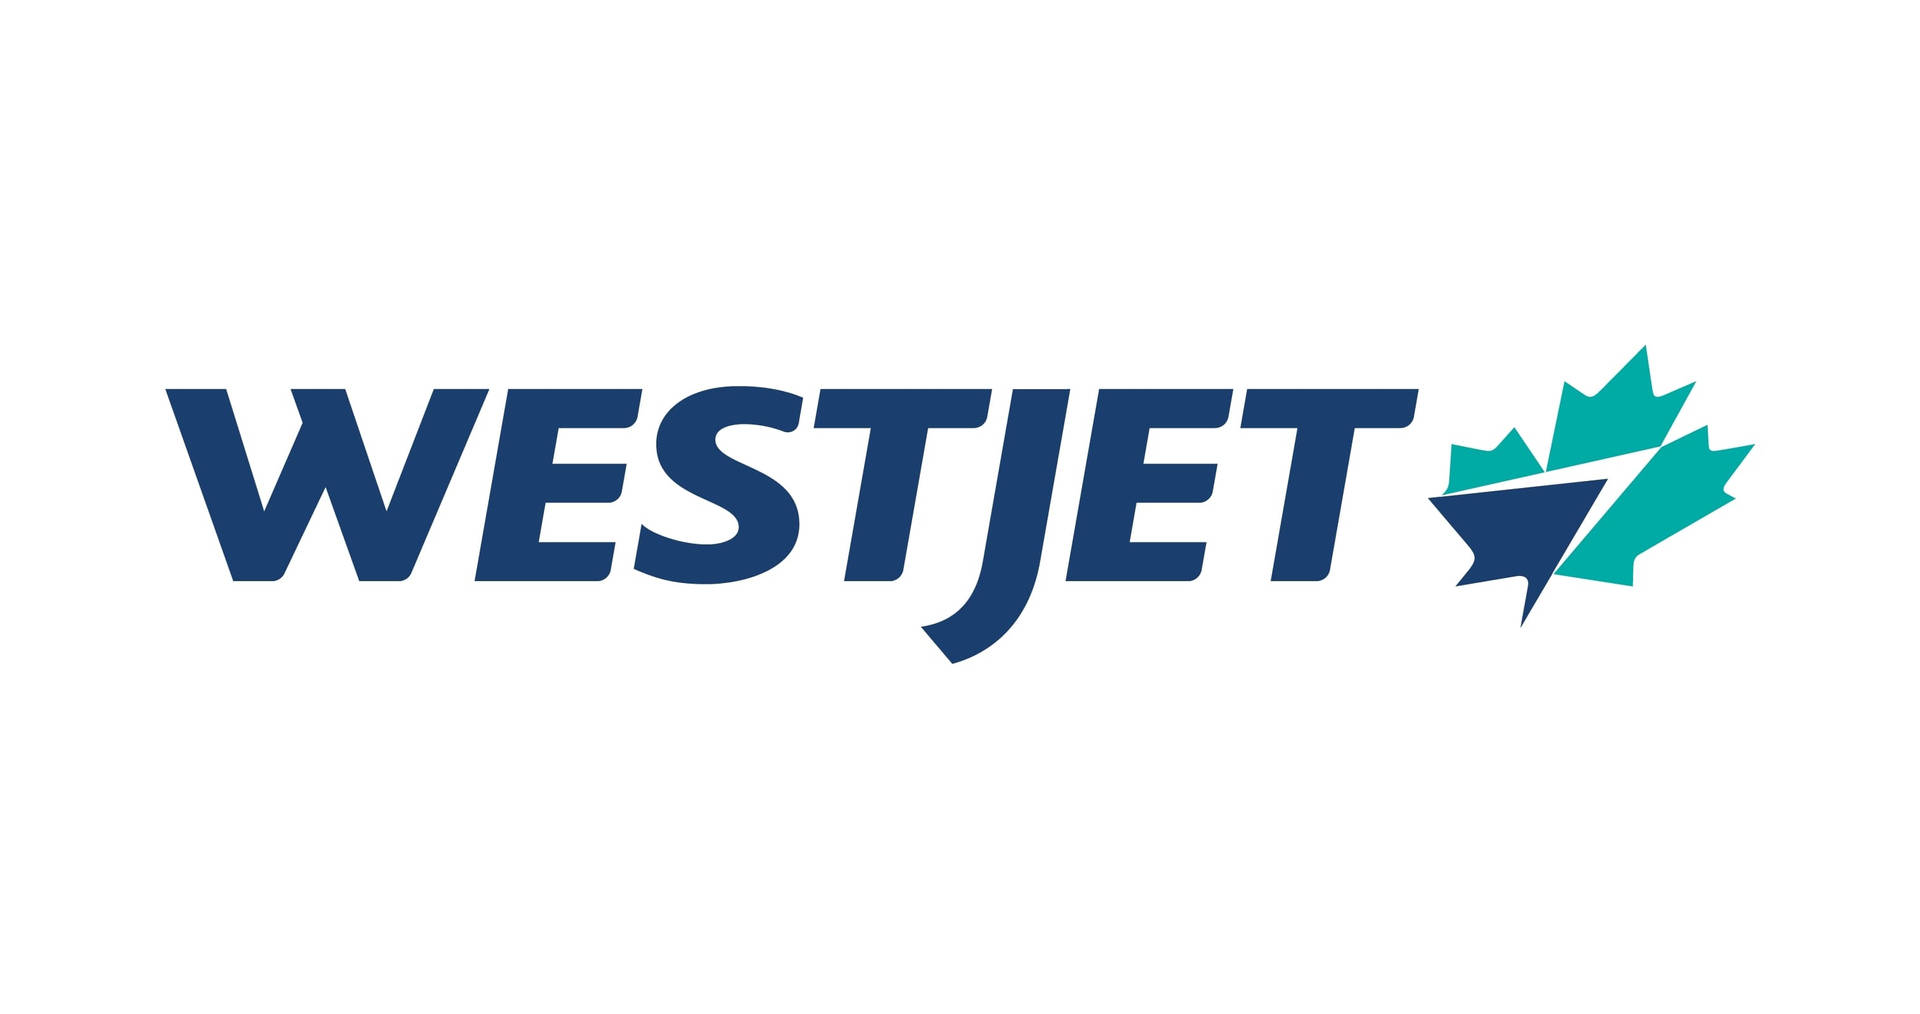 Vestjet Airline Banner Wallpaper